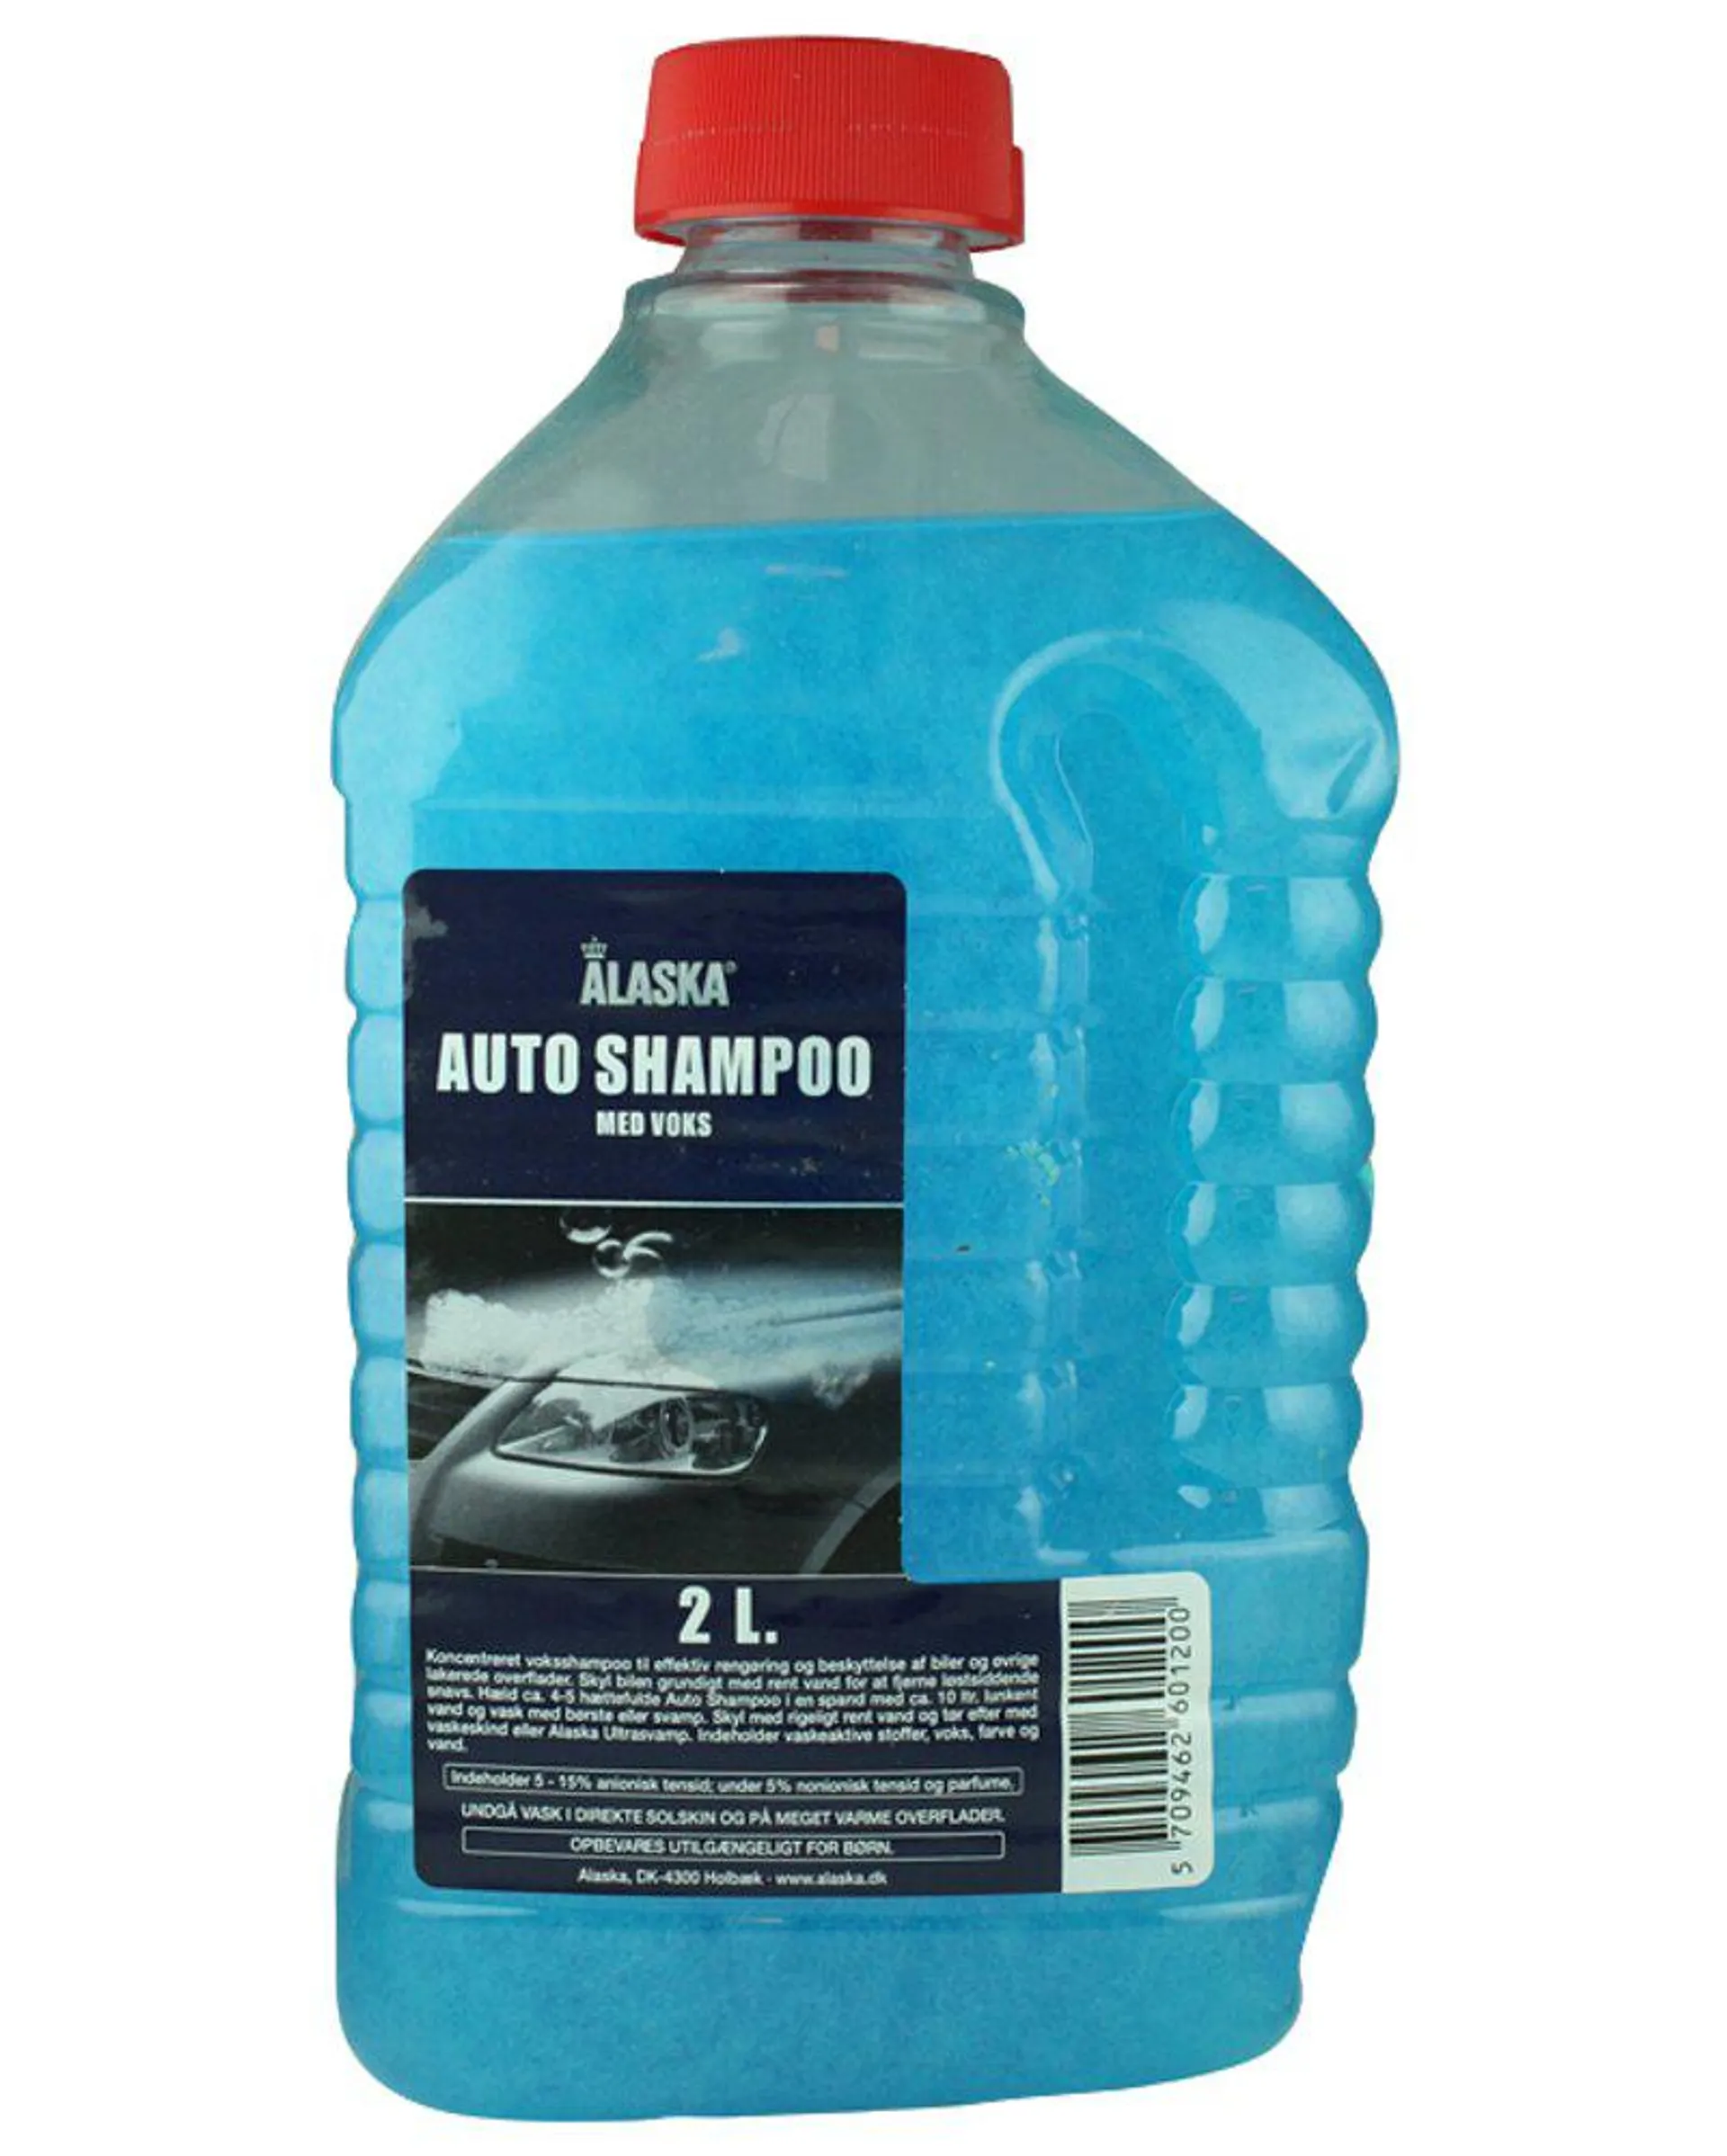 Alaska Autoshampoo med voks 2 L